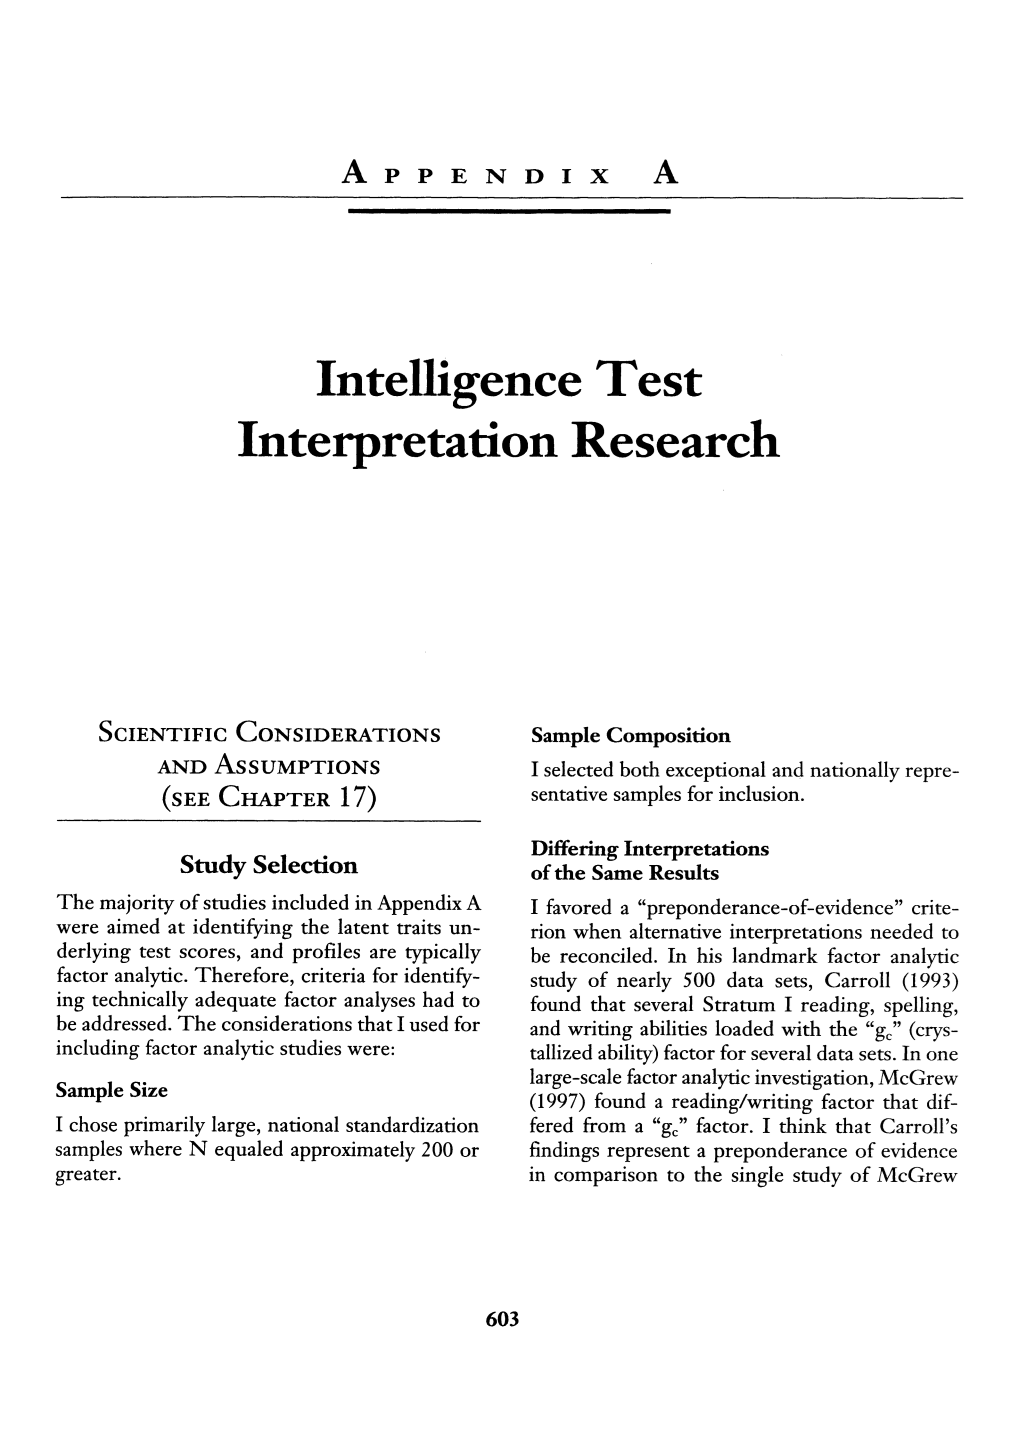 Intelligence Test Interpretation Research